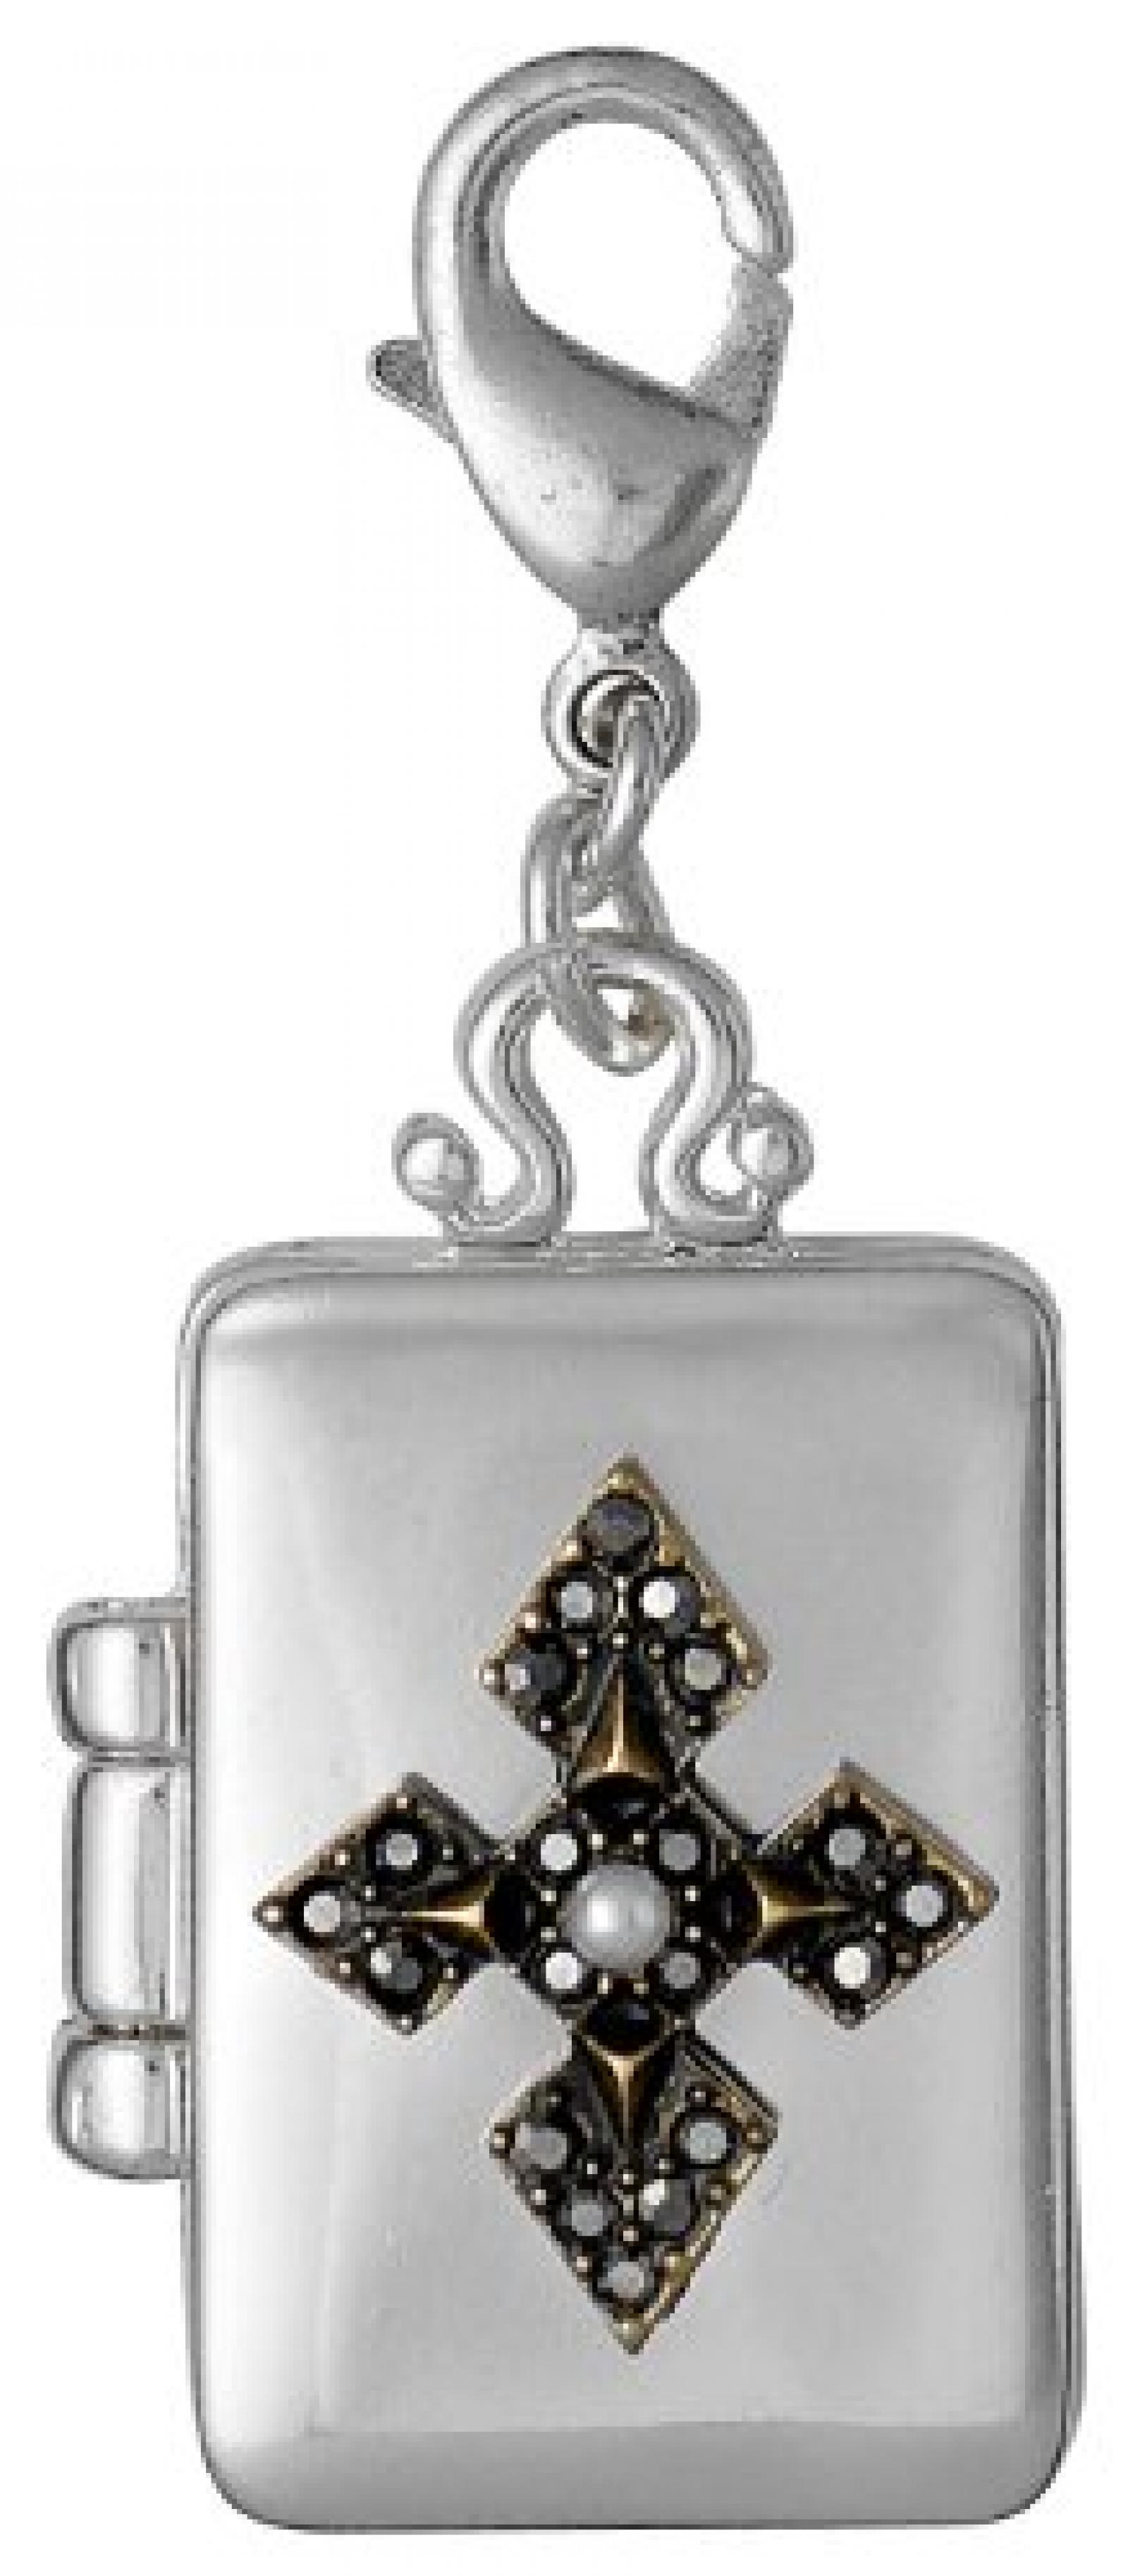 Pilgrim Jewelry Damen-Anhänger Messing Kristall Charms Vergoldet und Versilbert 4.2 cm weiß 401342007 